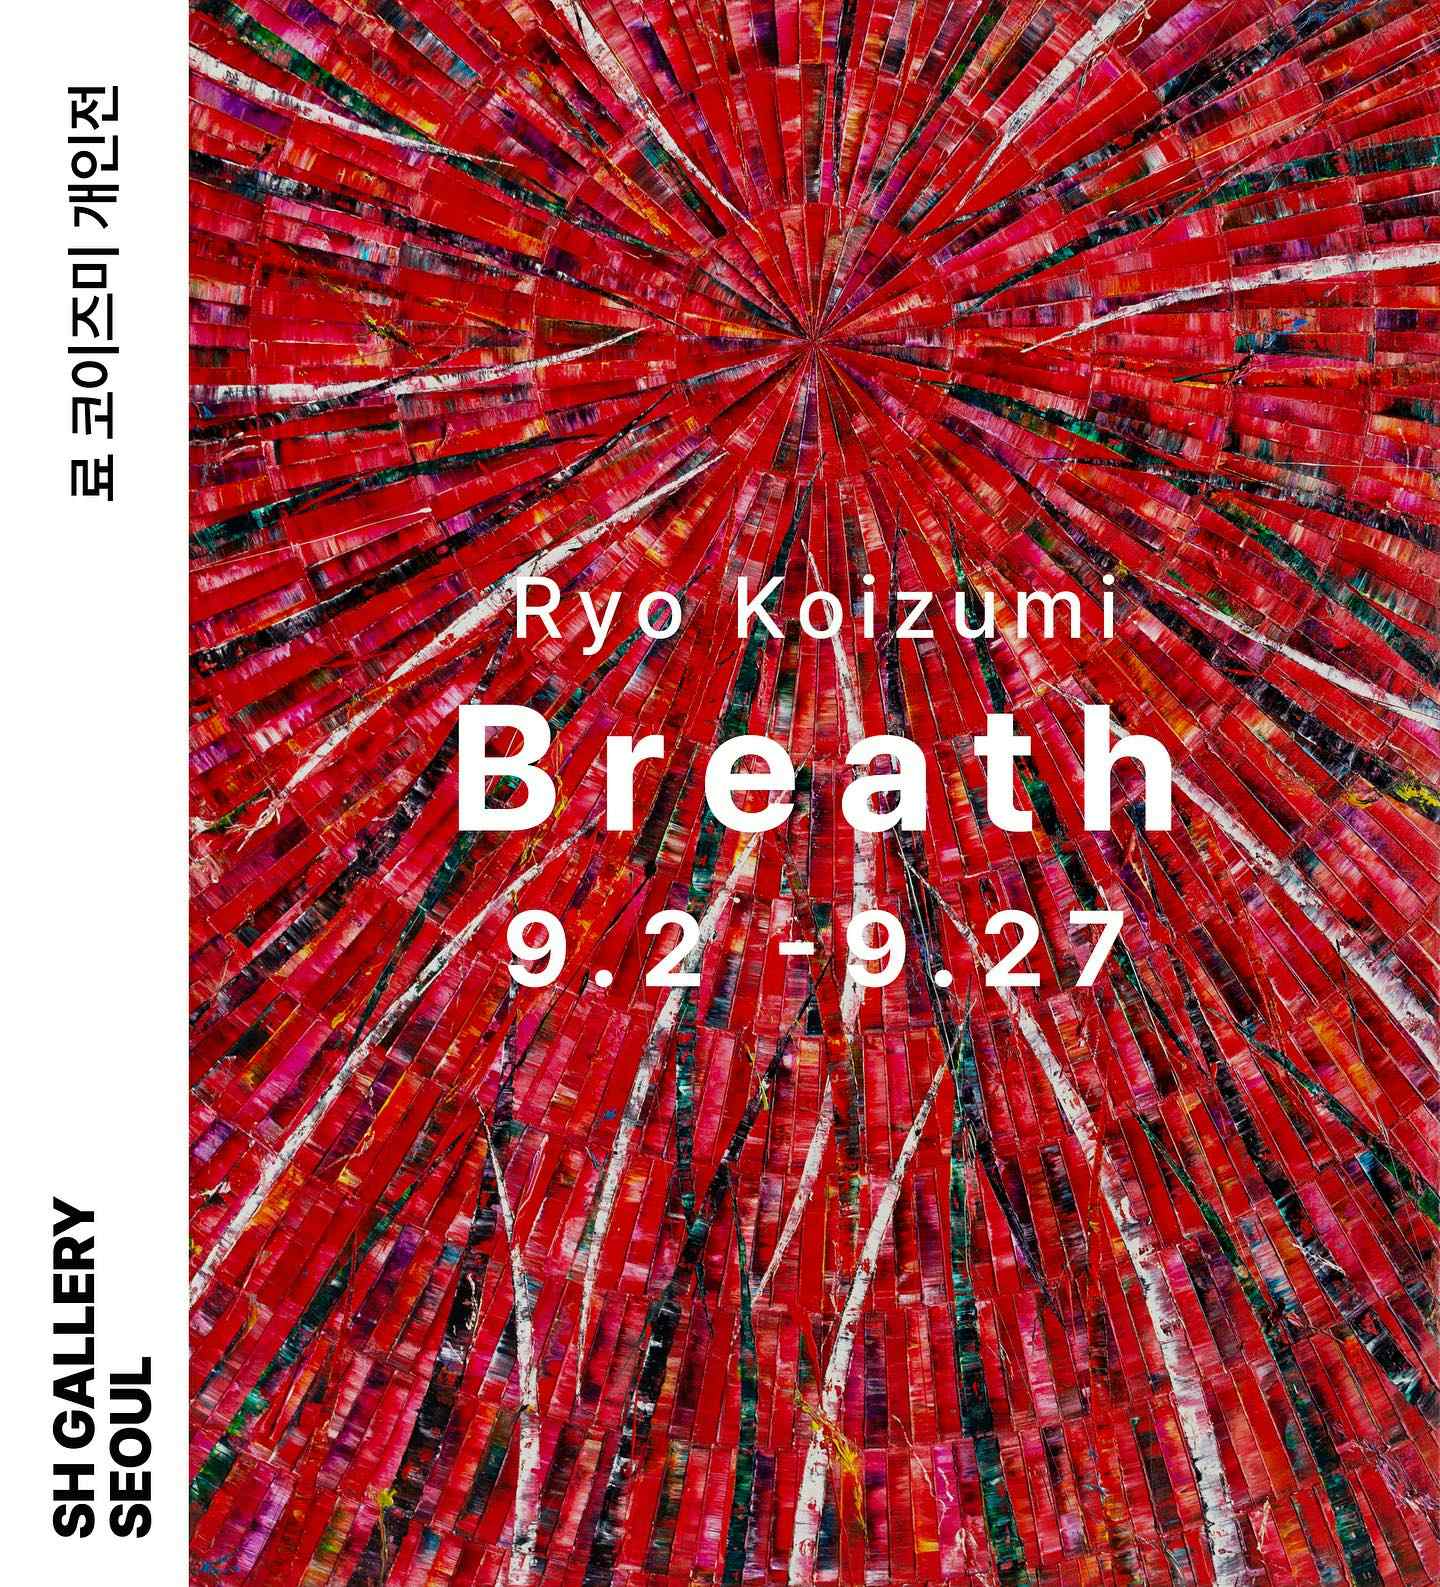 RYO KOIZUMI: BREATH